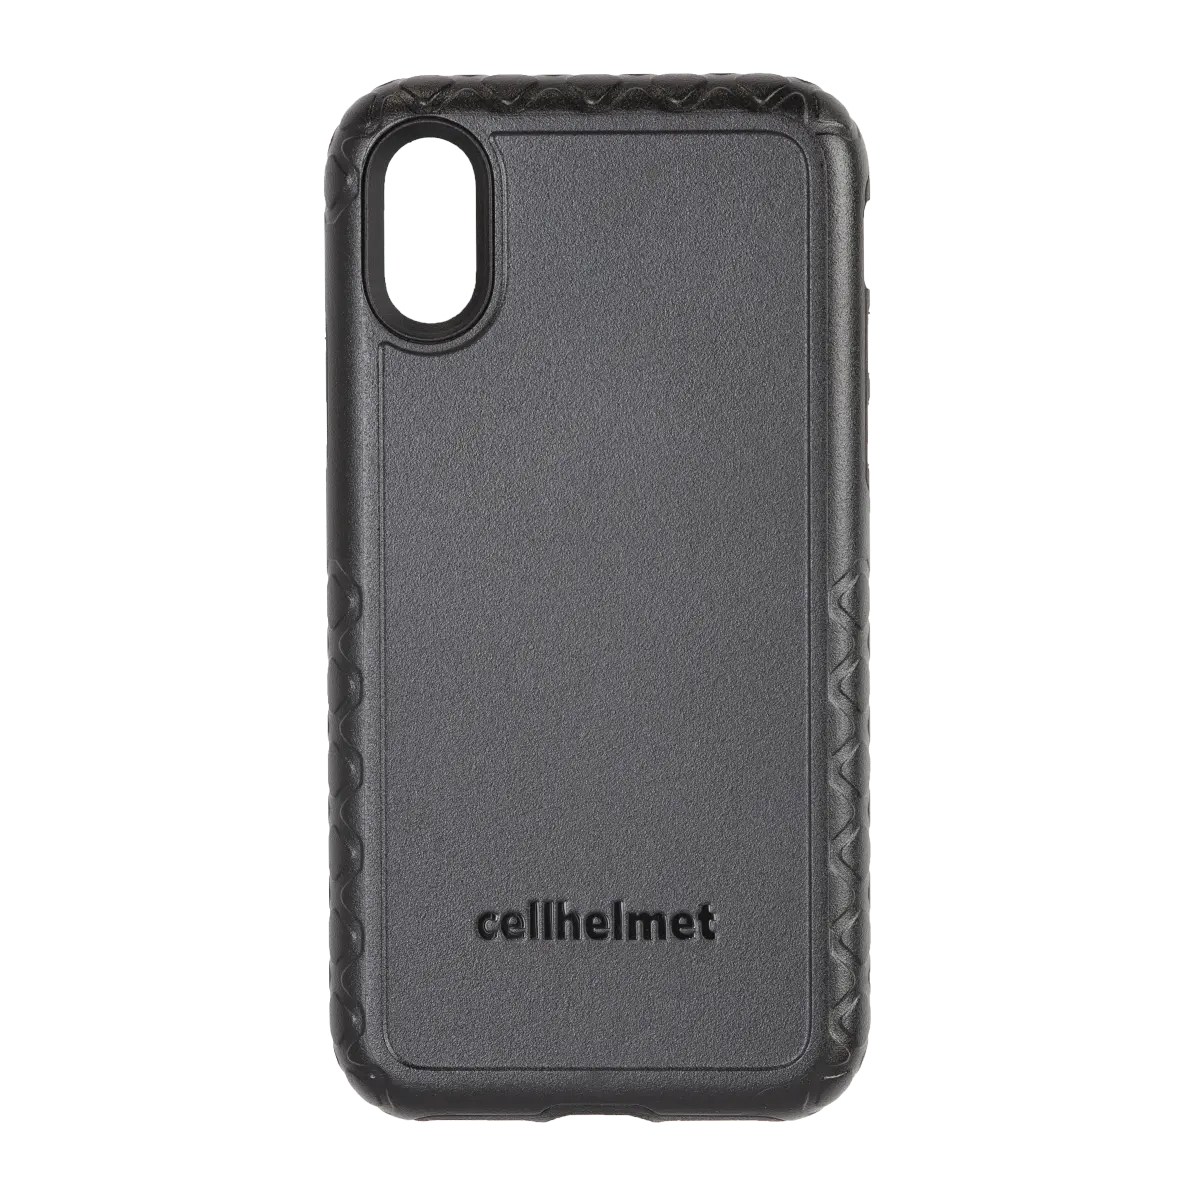 Black cellhelmet Customizable Case for iPhone XR